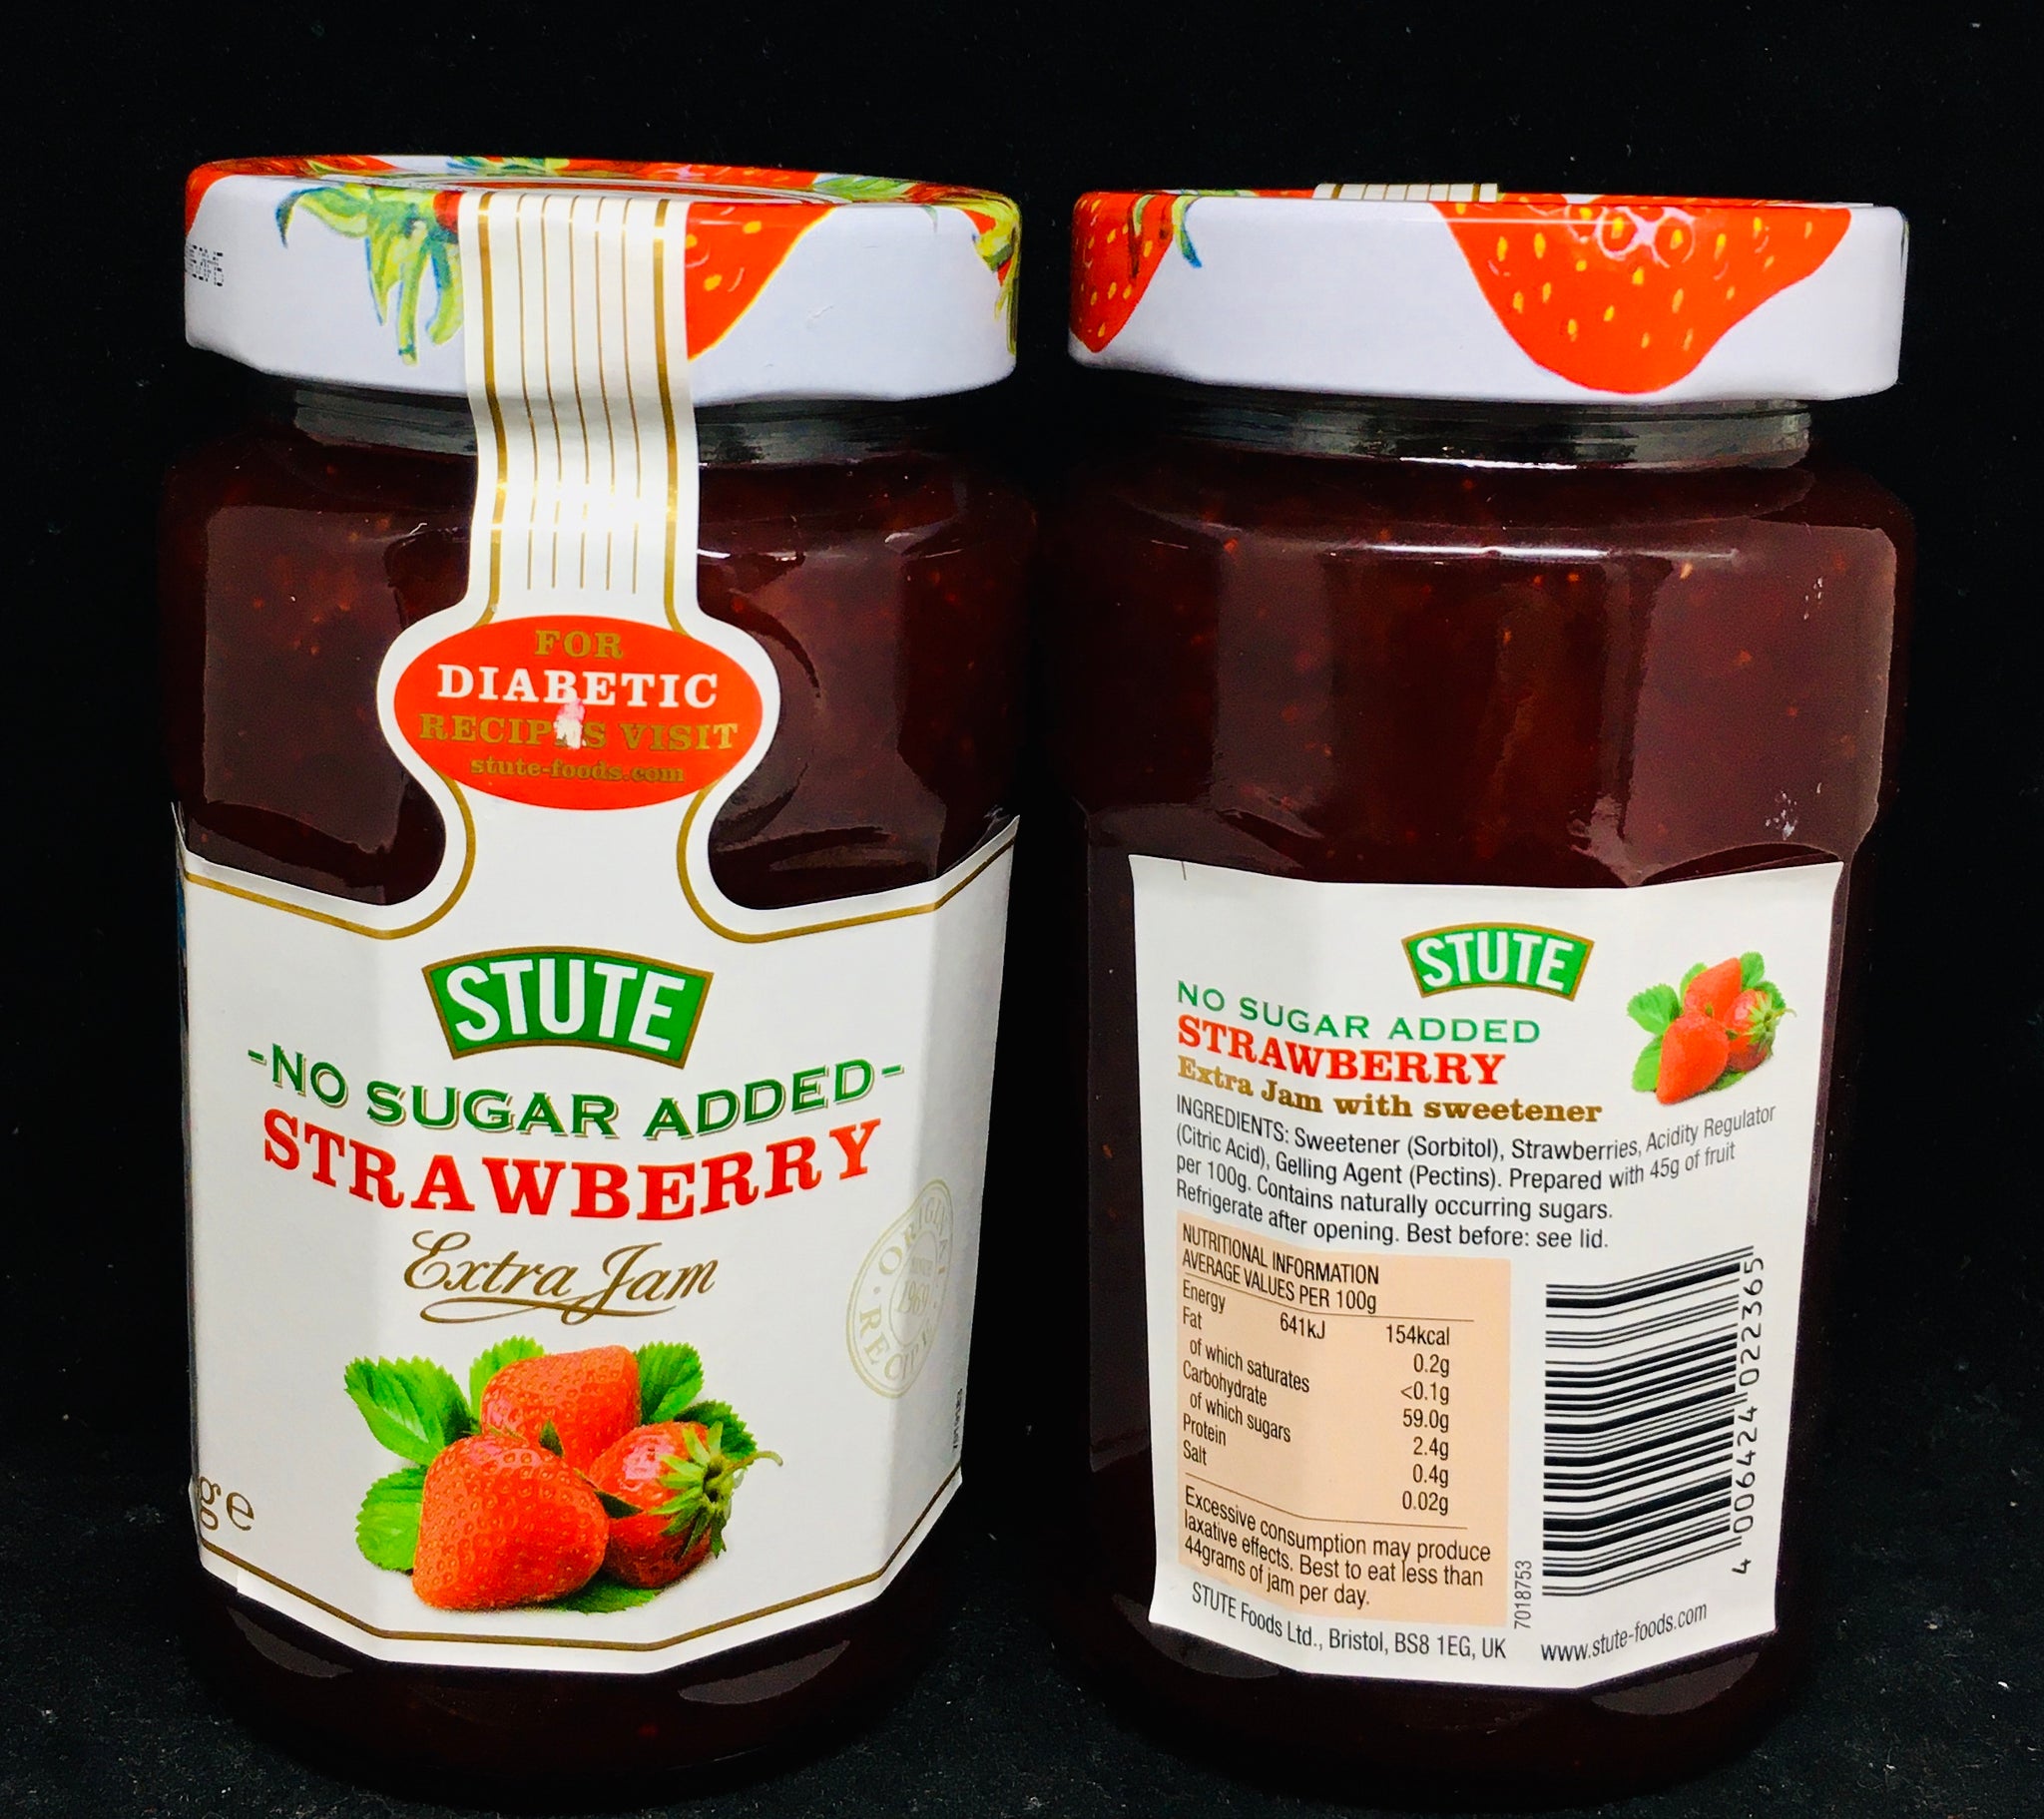 Stute Diabetic Jam - Strawberry